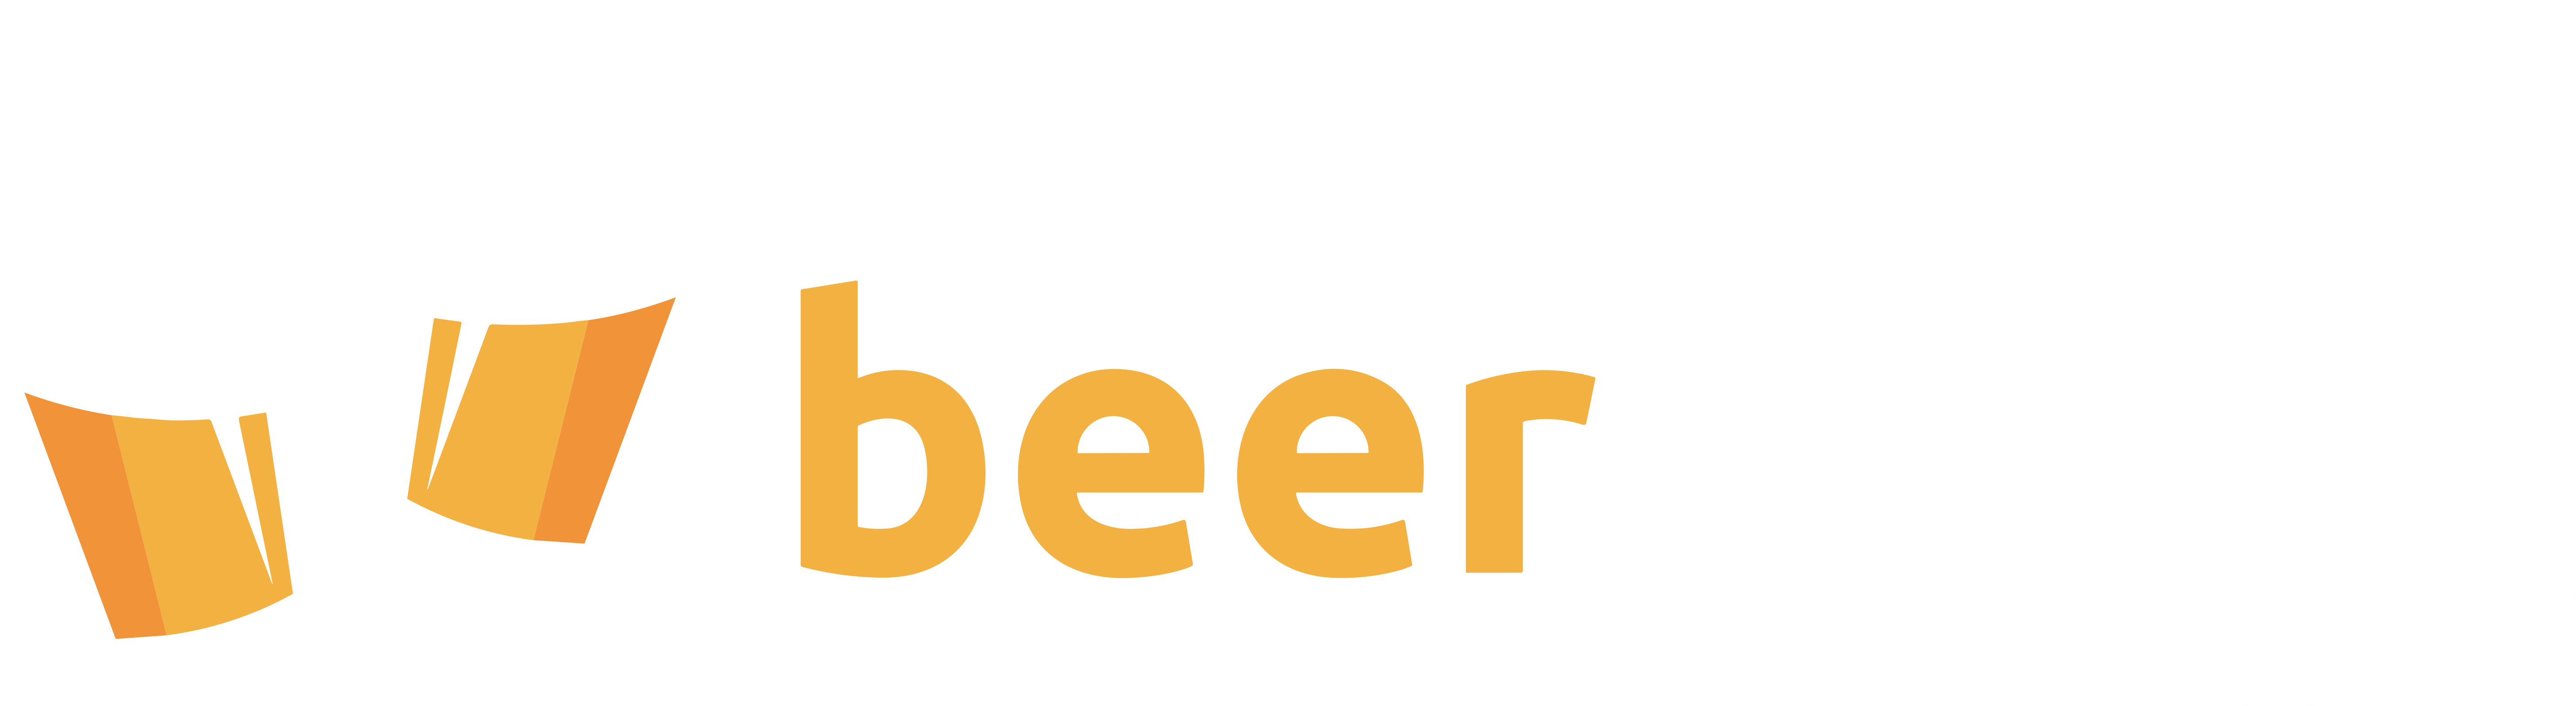 Beerfests.com logo